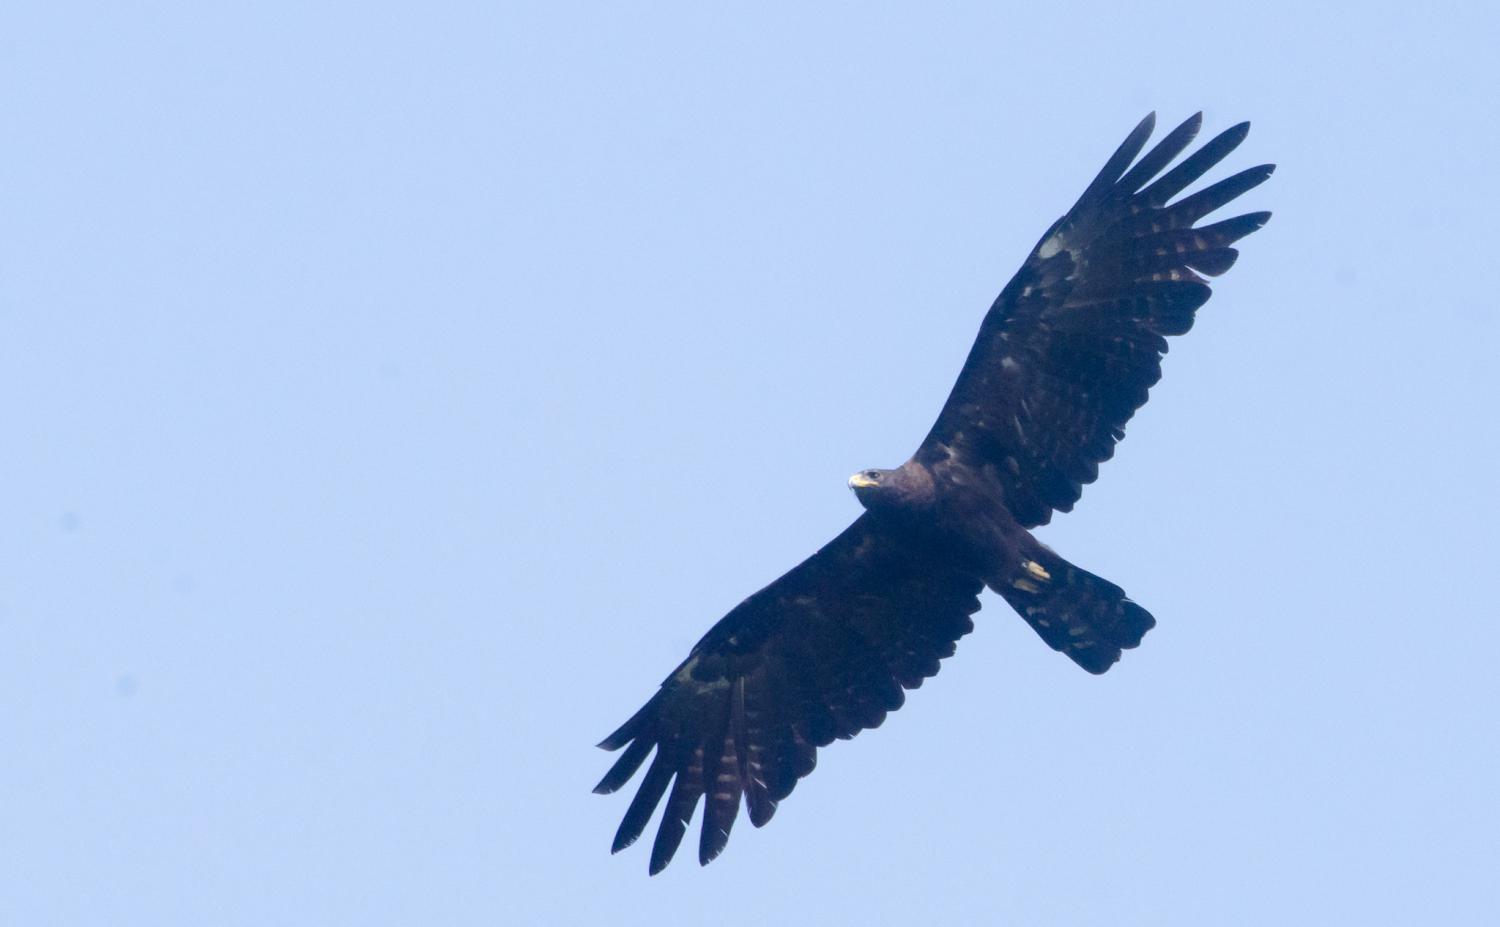 http://www.thainationalparks.com/img/species/2020/08/17/395890/black-eagle-w-1500.jpg